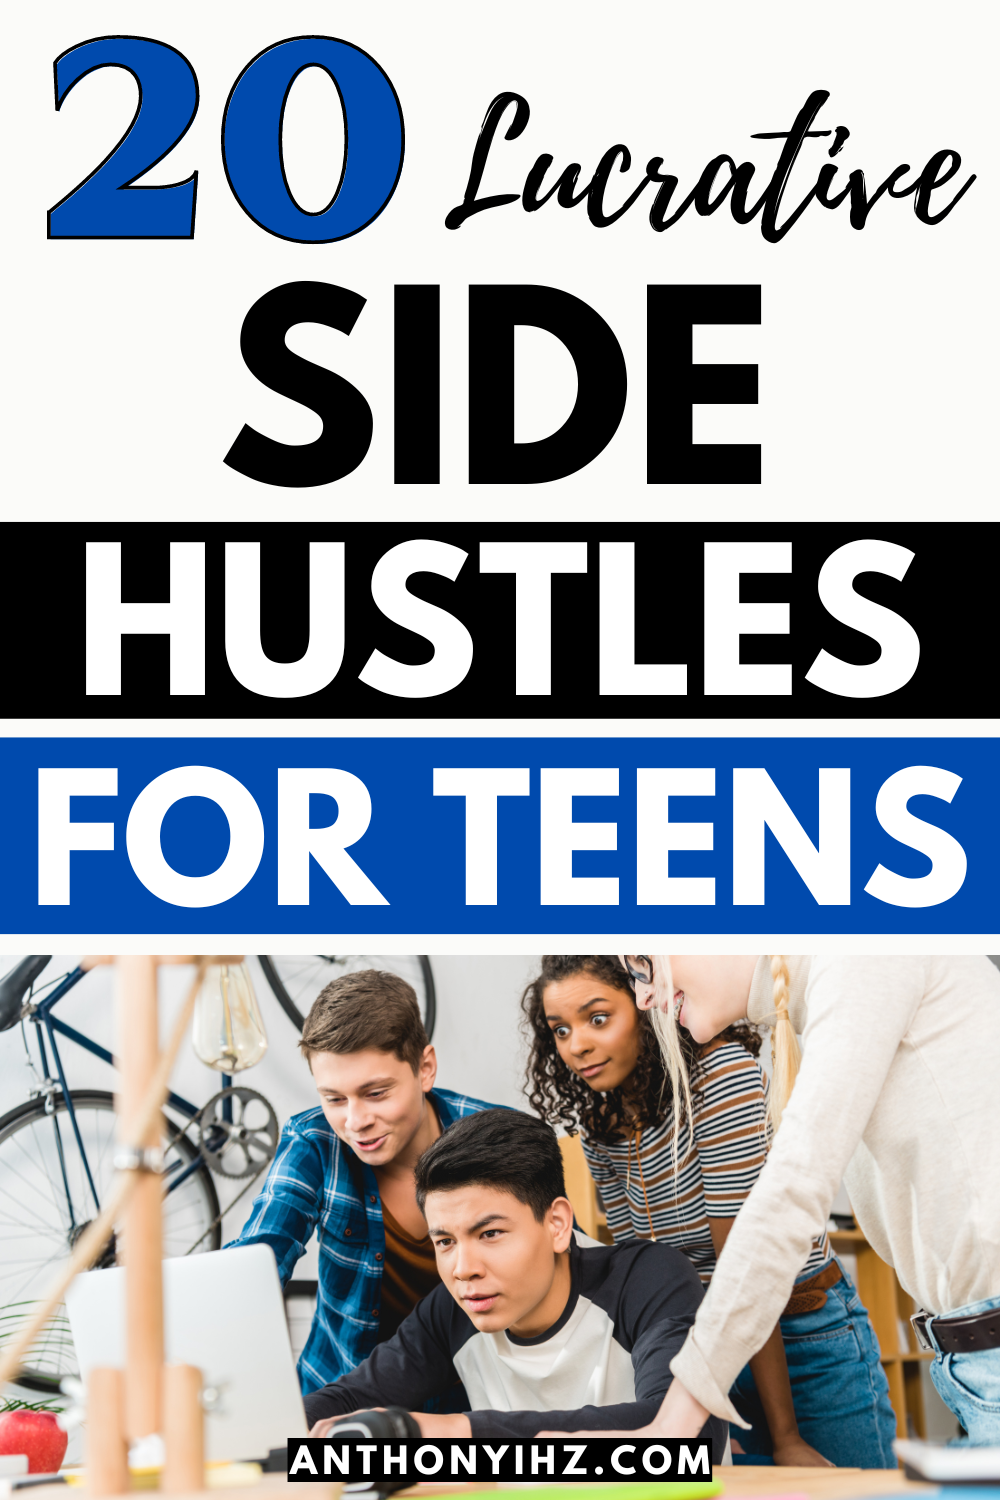 side hustles for teens